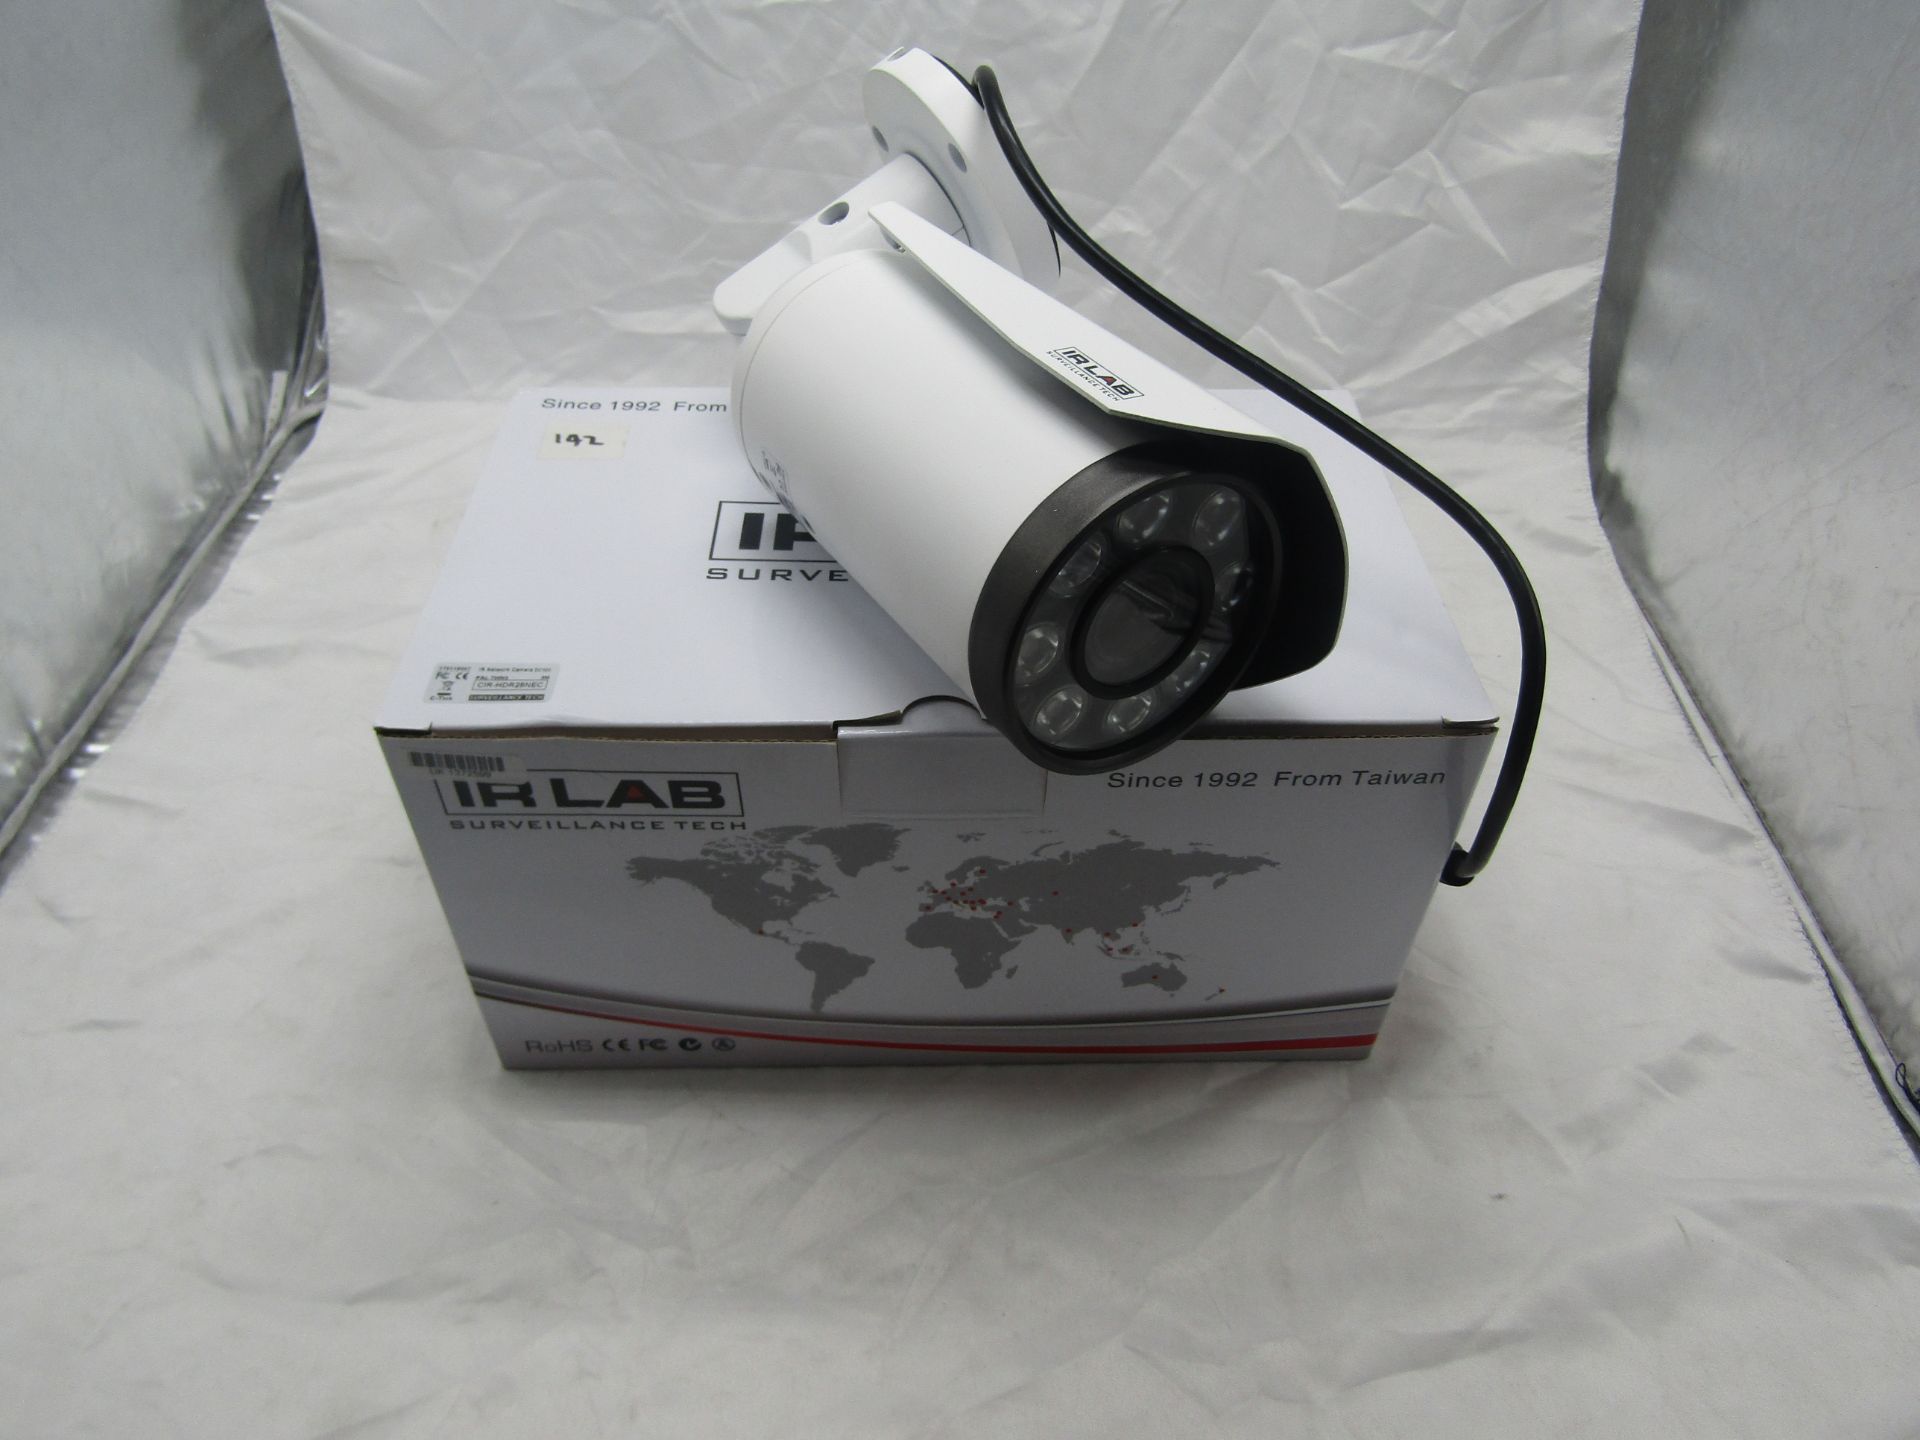 IR Lab Surveillance Tech Network Camera DC12V CIR-HDR28NEC SURVEILLANCE TECH IRLAB 3.0MP H.264